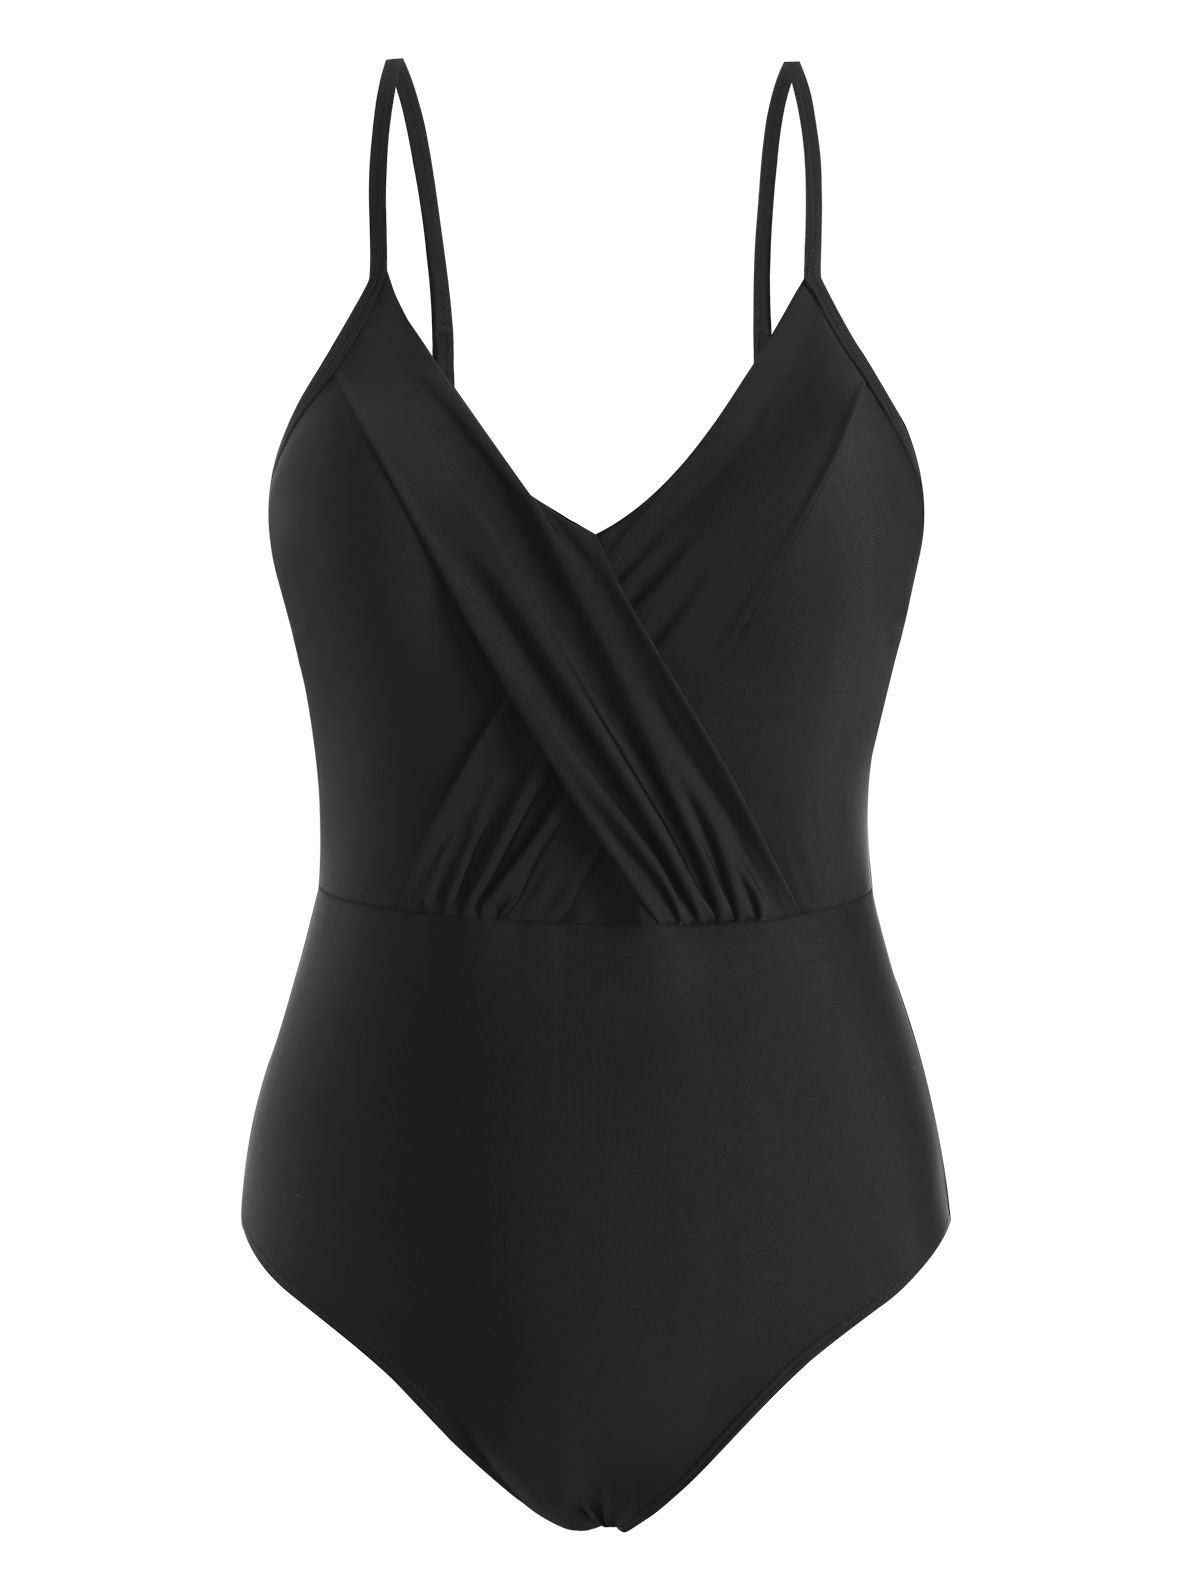 Criss Cross Plunge Front One-piece Swimsuit - BLACK M